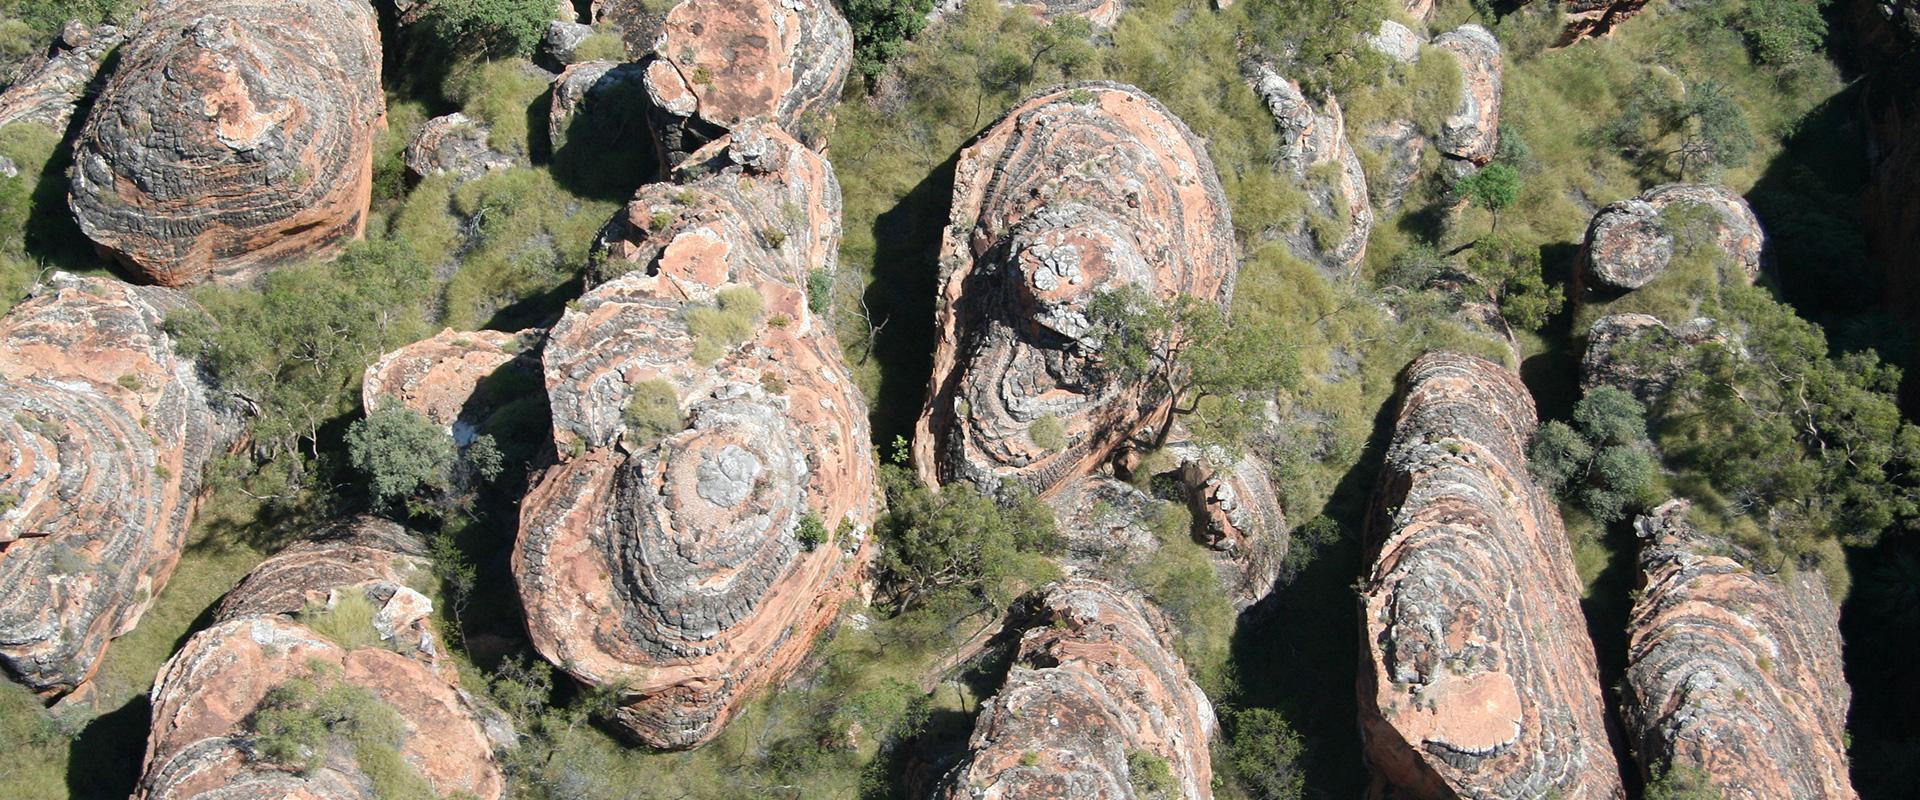 Aerial view of the sandstone of the Bungle Bungle range, Australia